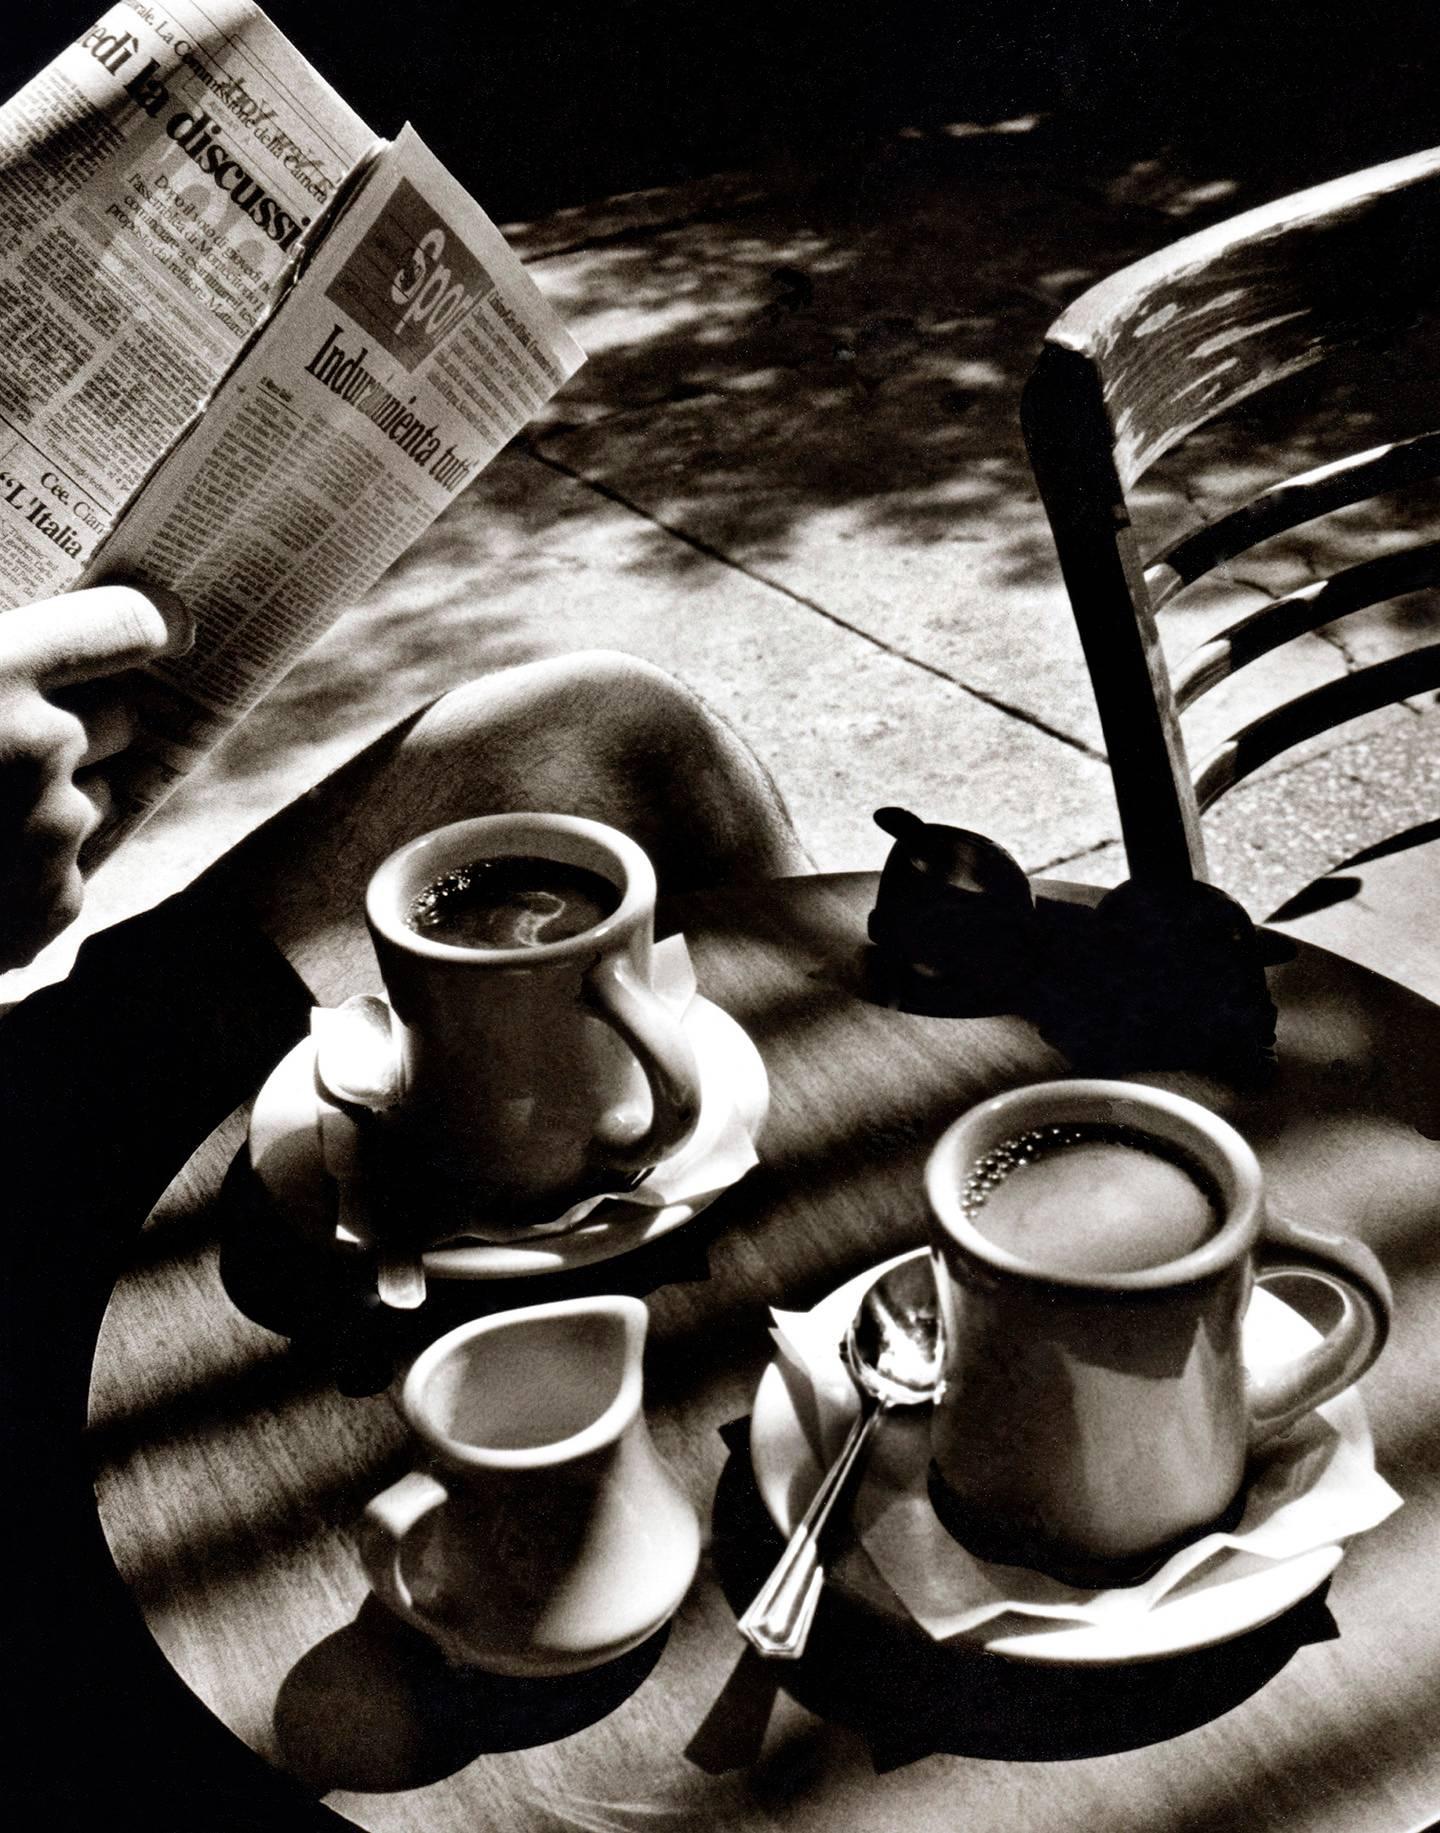 Fernando Natalici Black and White Photograph - Sunday Morning Coffee Photograph New York, NY 1996